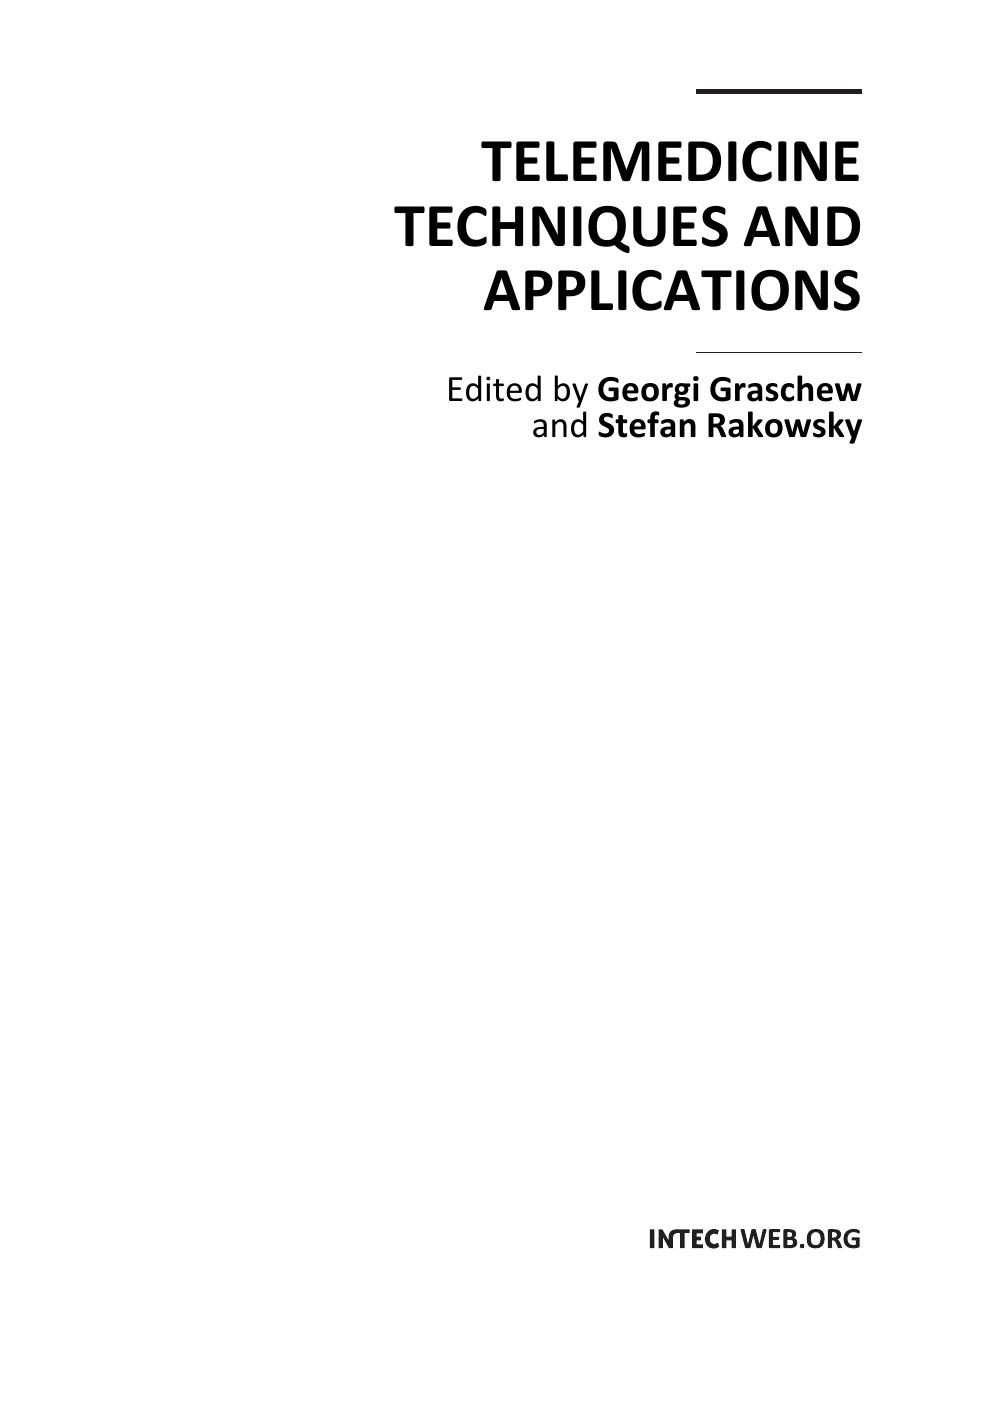 Telemedicine Techniques and Applications 2011.pdf